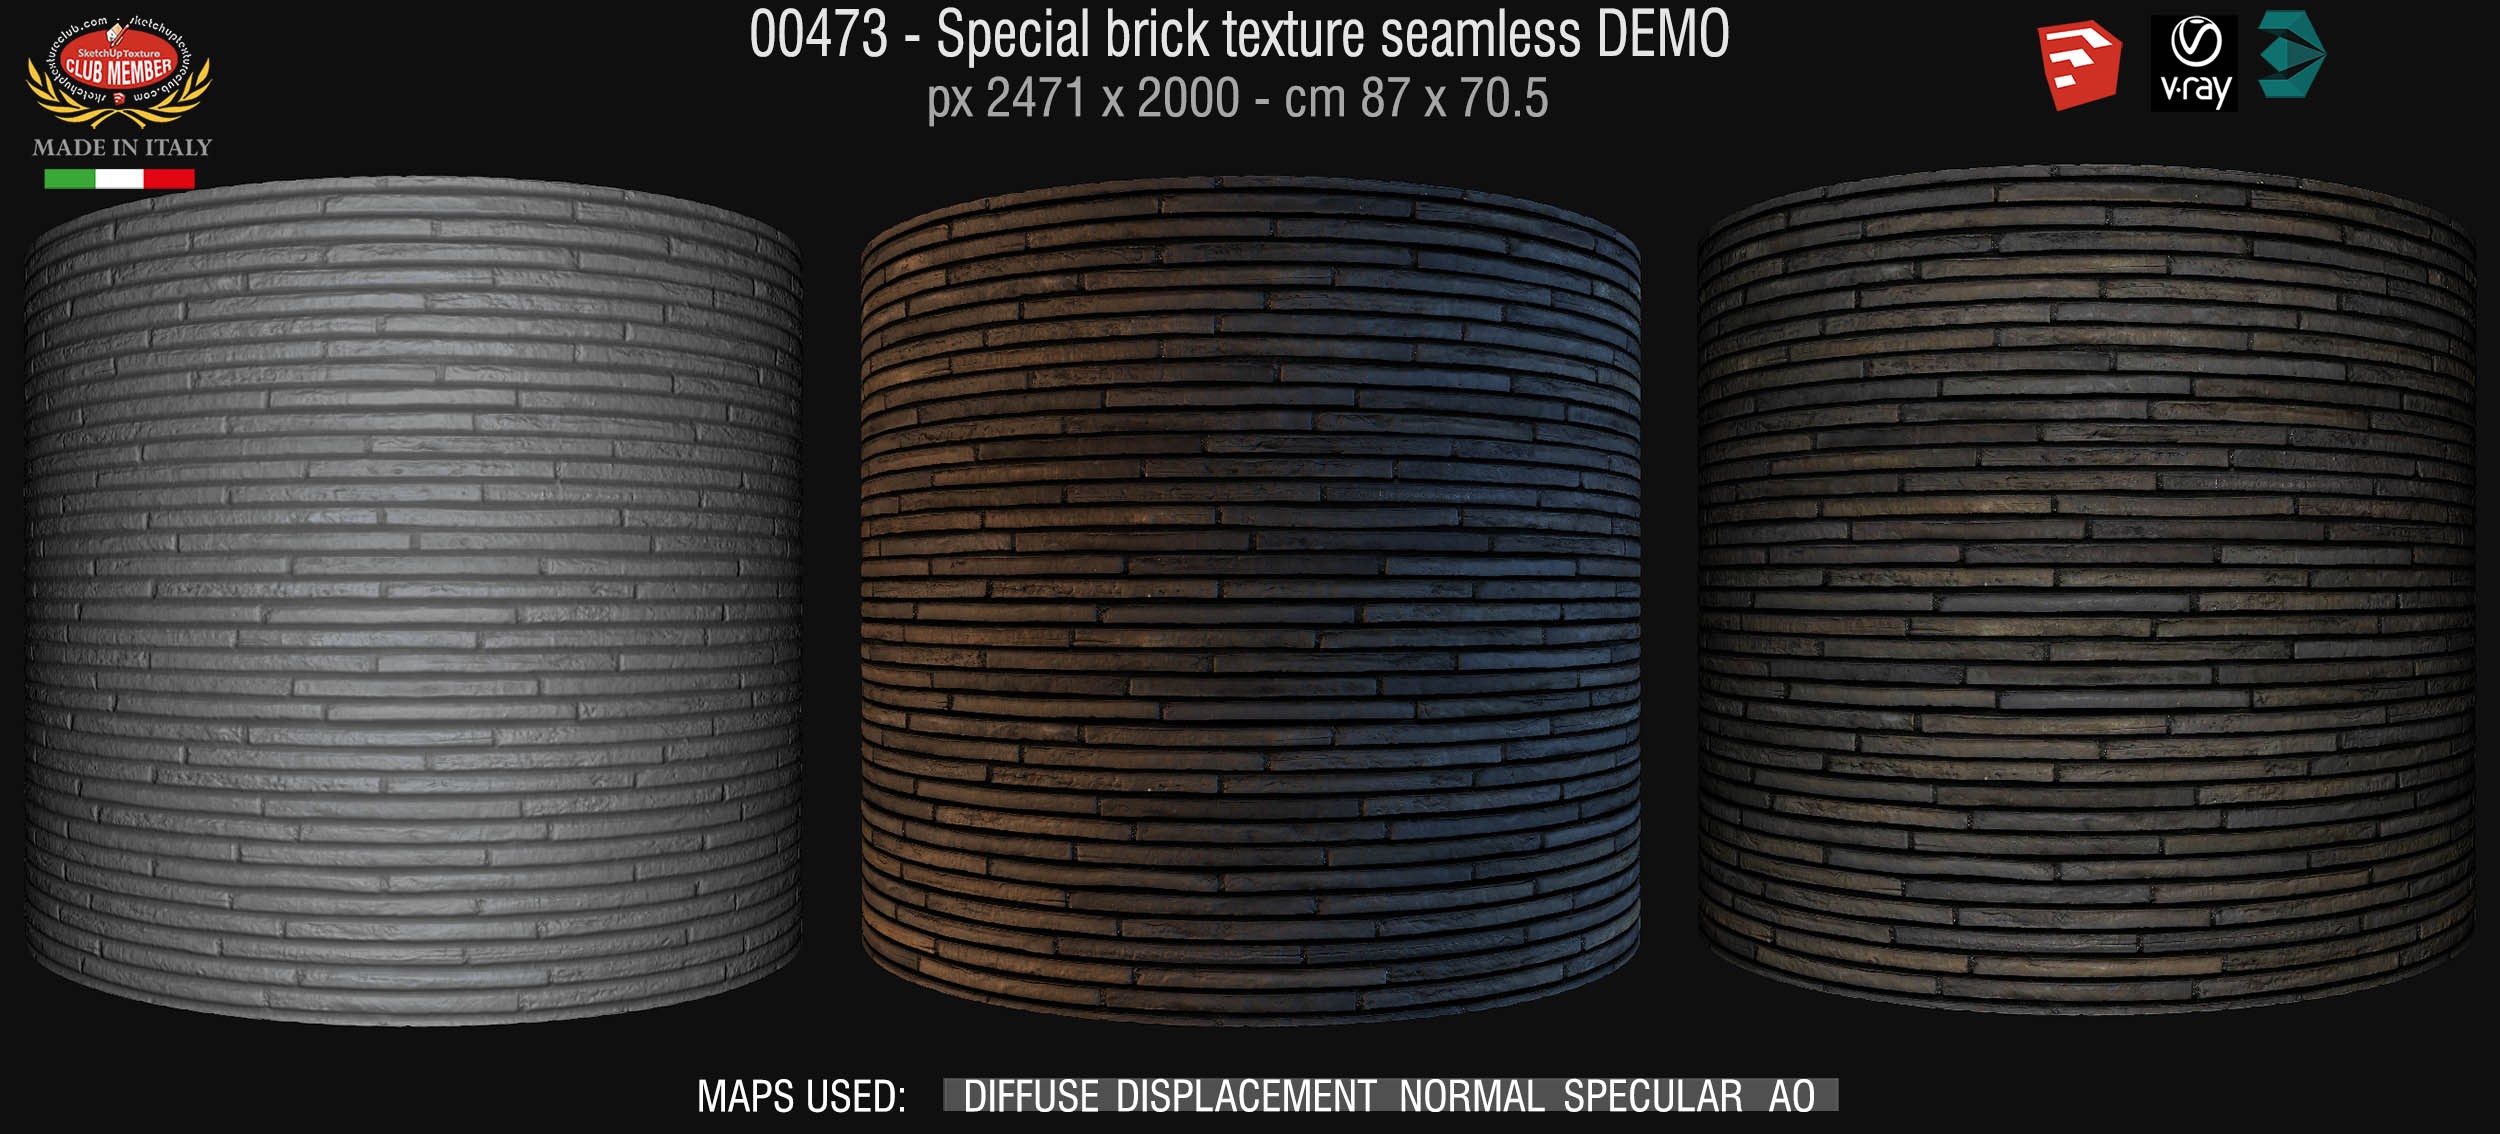 00473 Special brick texture seamless + maps DEMO